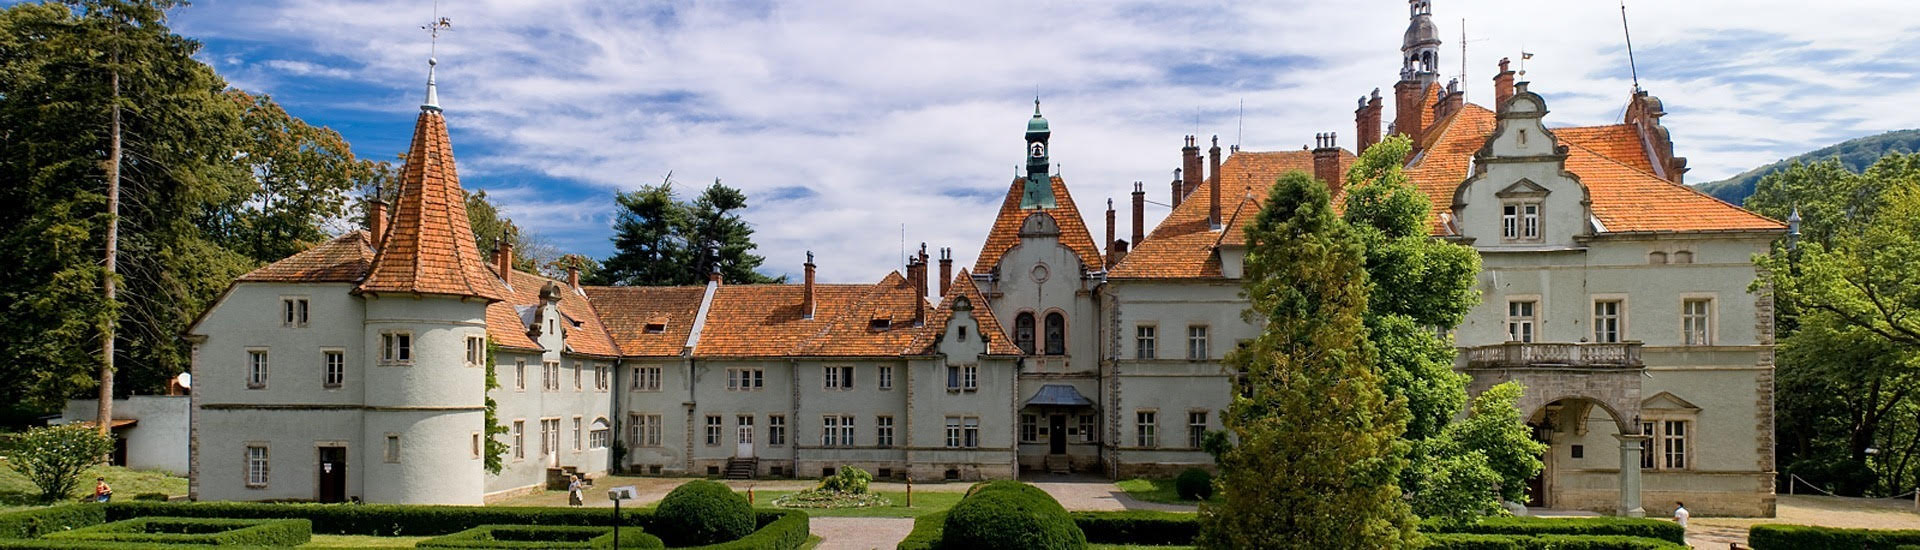 Shoenborn palace